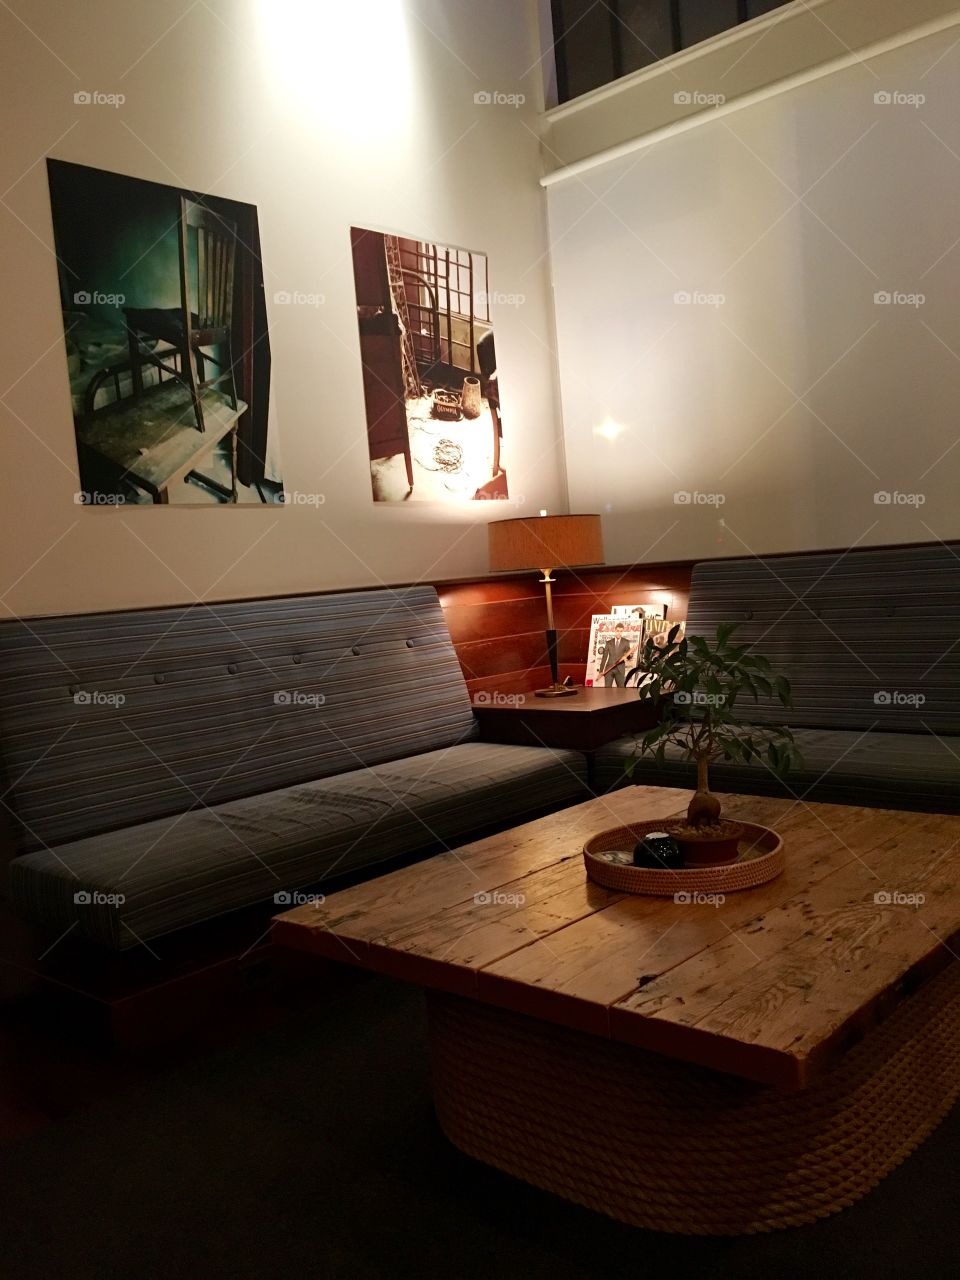 Furniture, Room, Interior Design, Indoors, Table